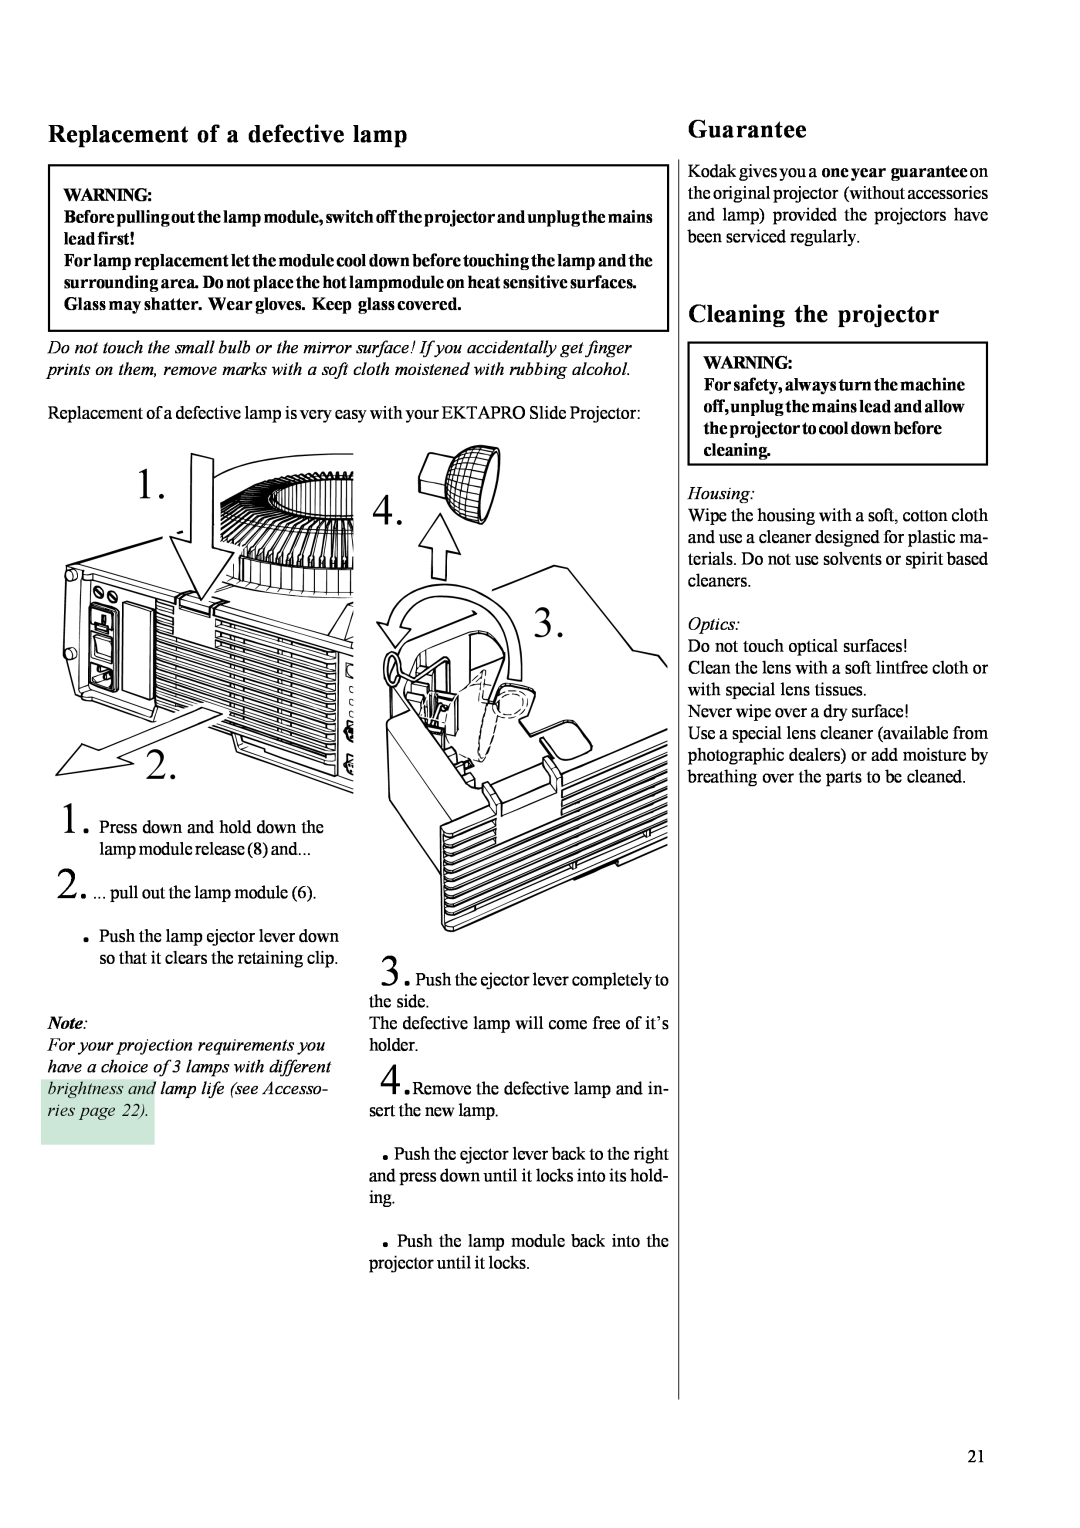 Kodak EKTAPRO instruction manual Replacement of a defective lamp, Guarantee, Cleaning the projector, Housing, Optics 